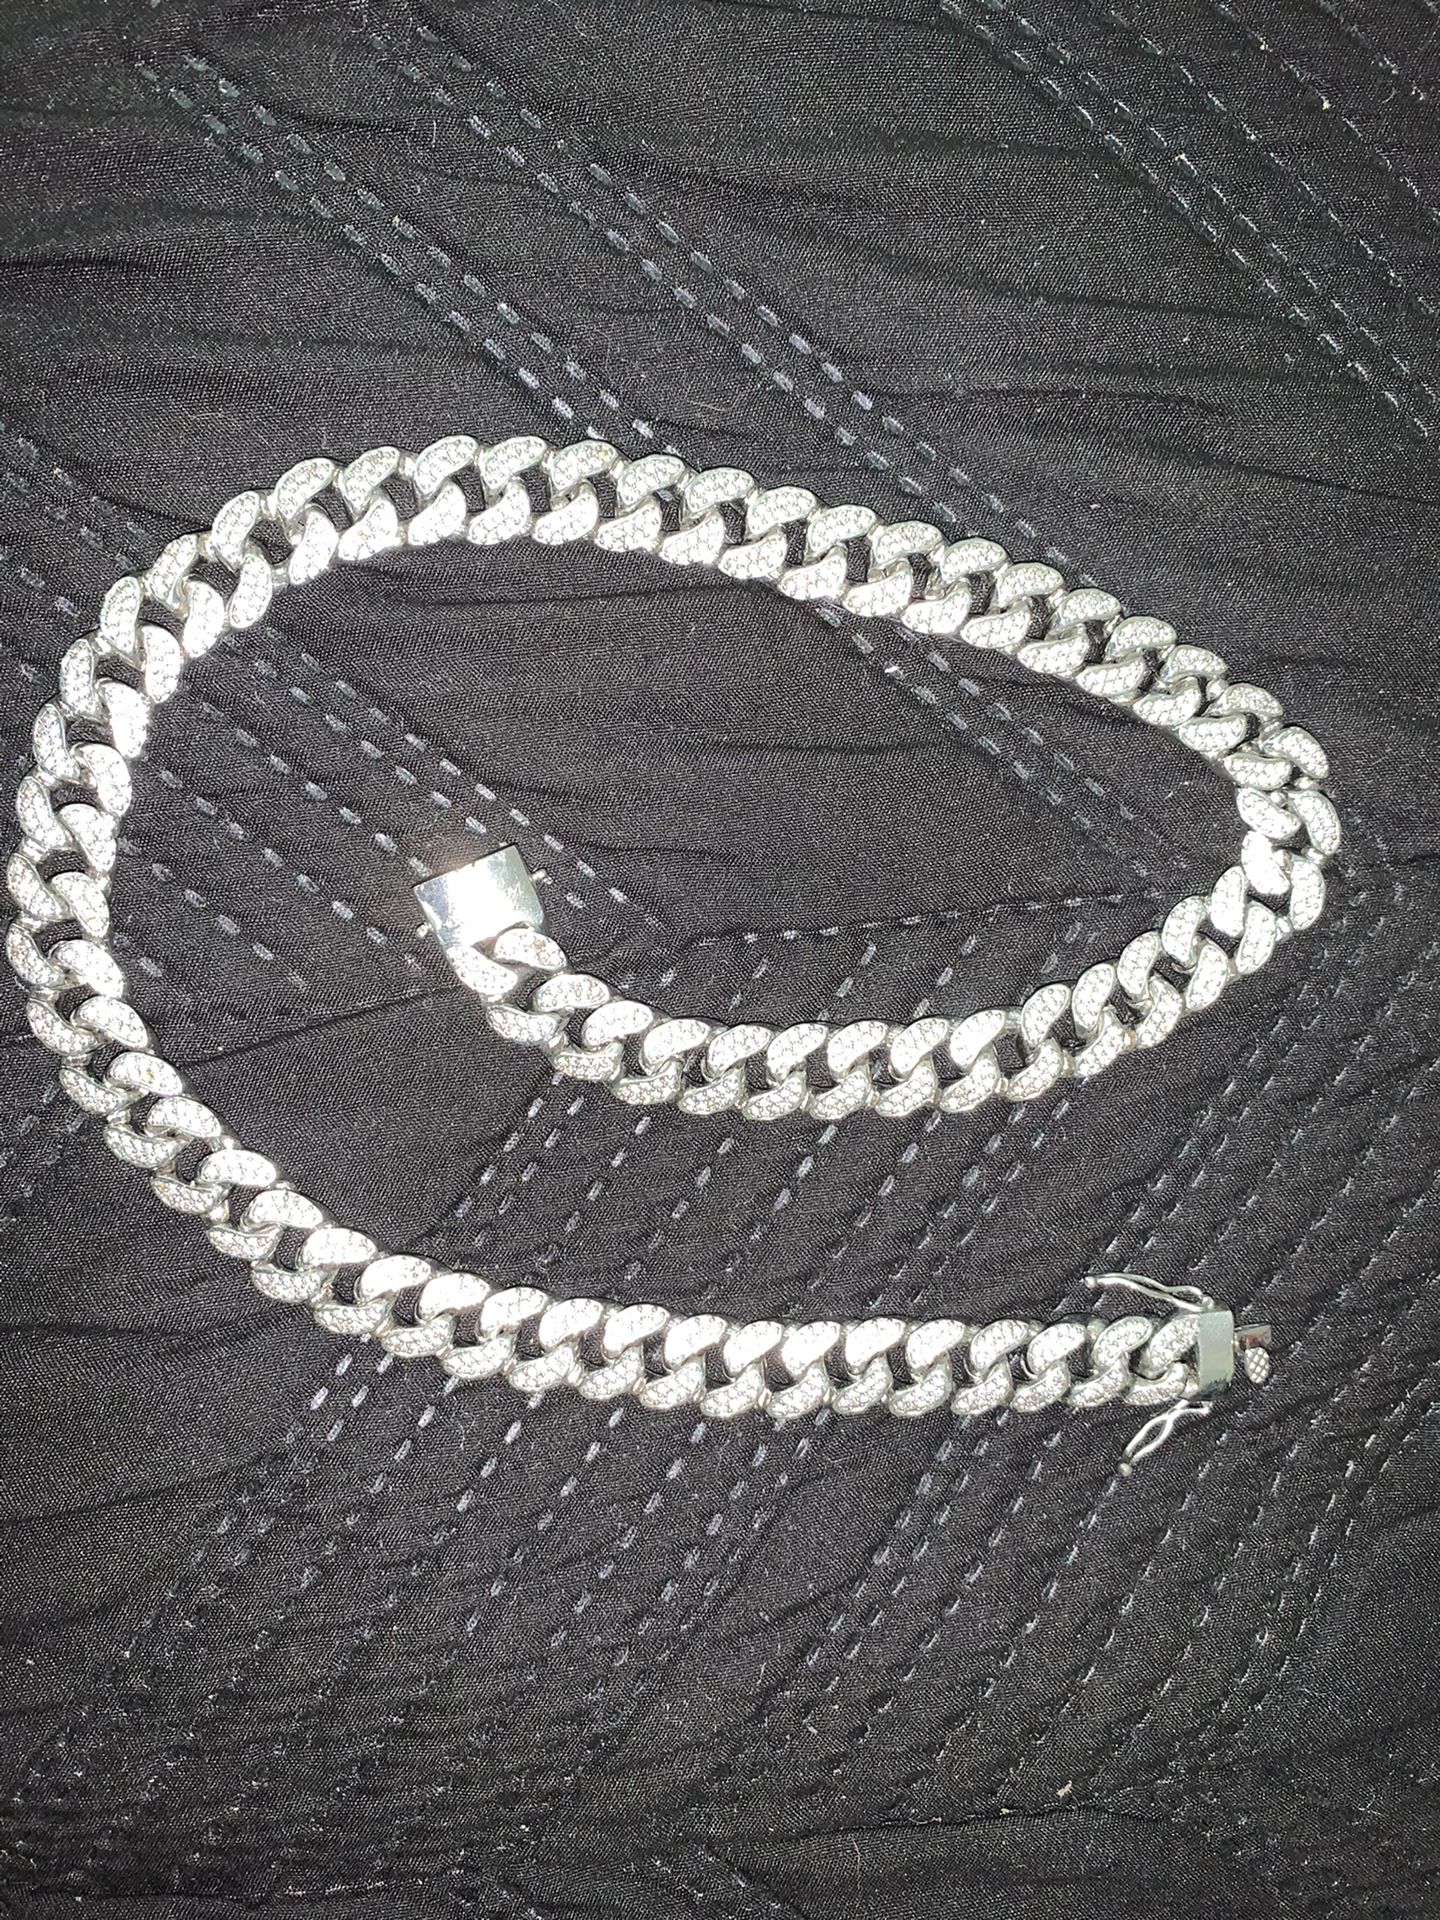 Silver diamond linked chains (cream jewelry)